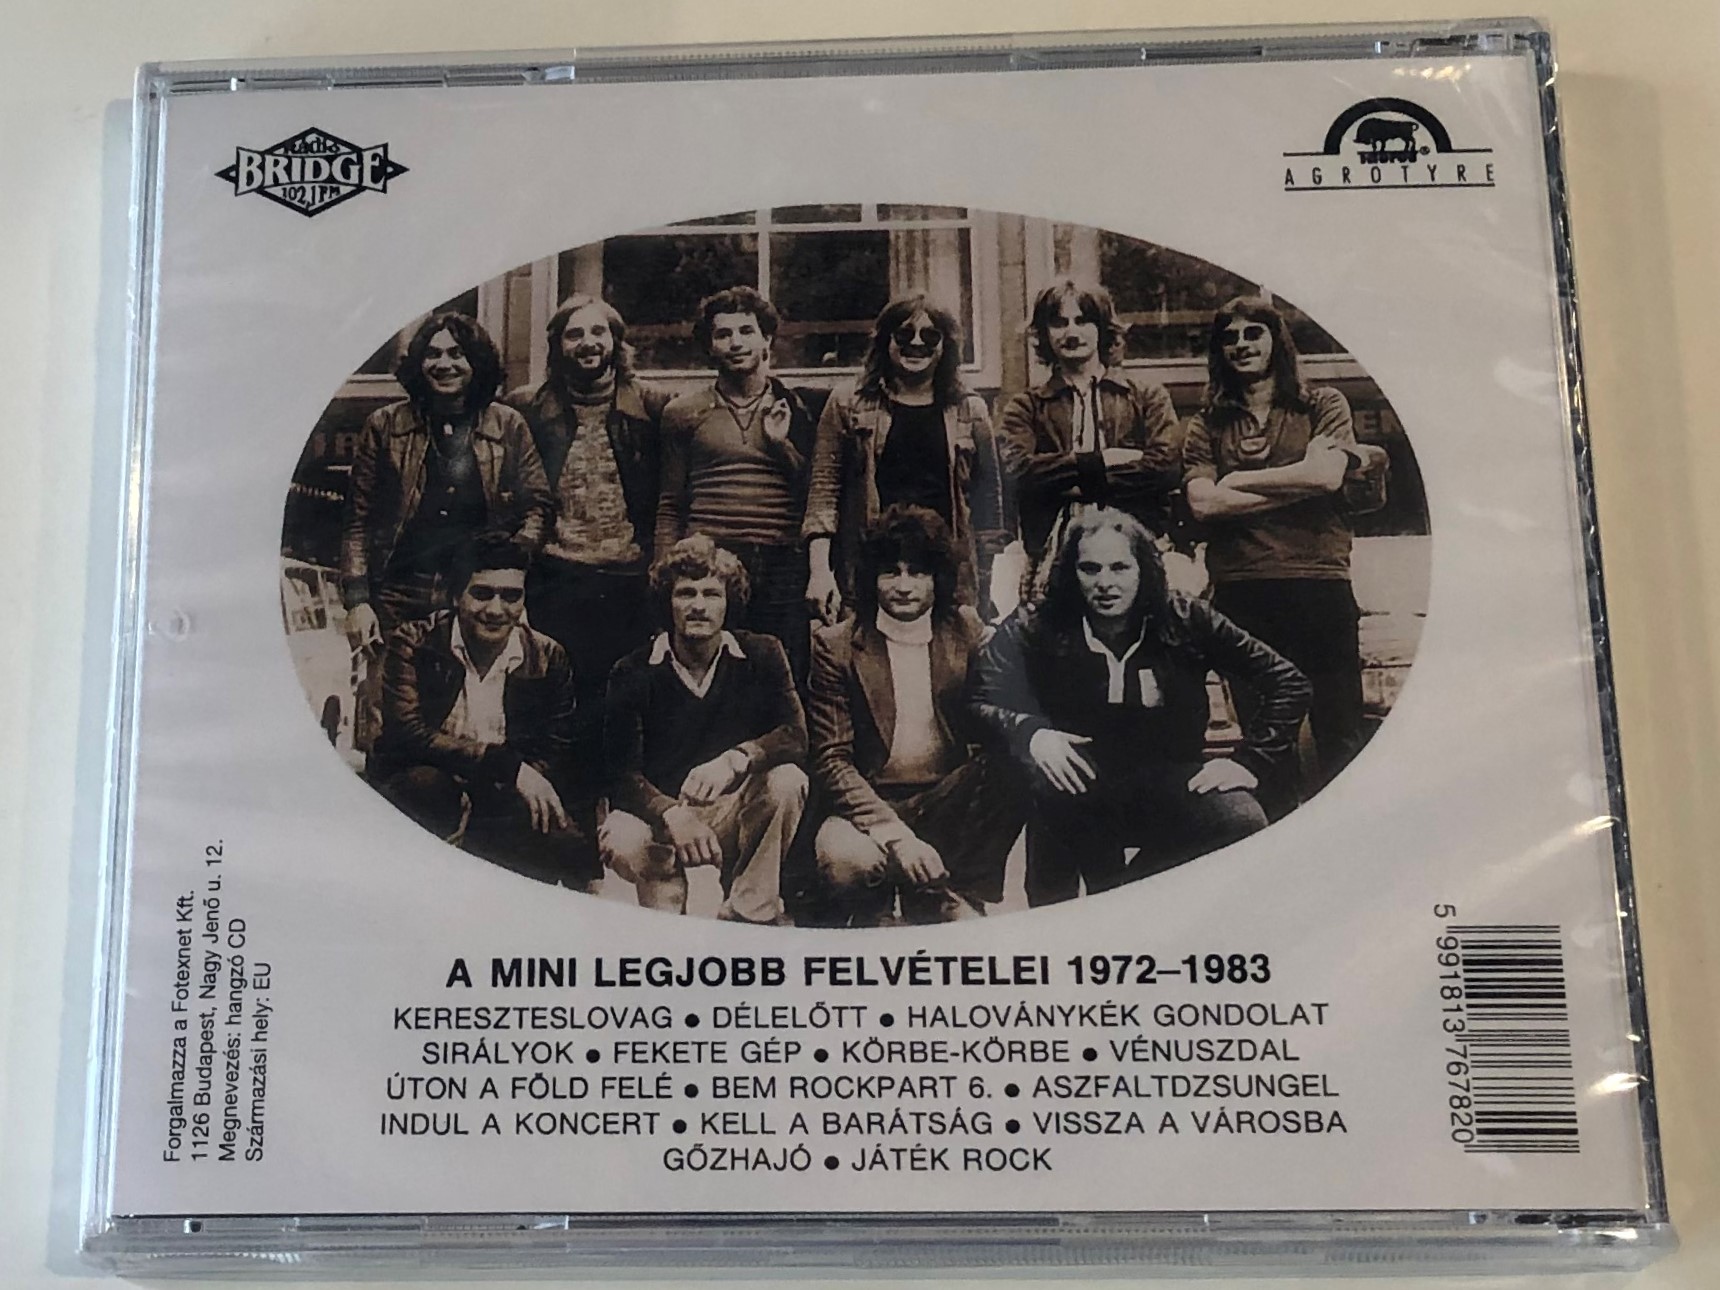 a-mini-legjobb-felv-telei-1972-1983-vissza-a-v-rosba-hungaroton-audio-cd-hcd-37678-2-.jpg